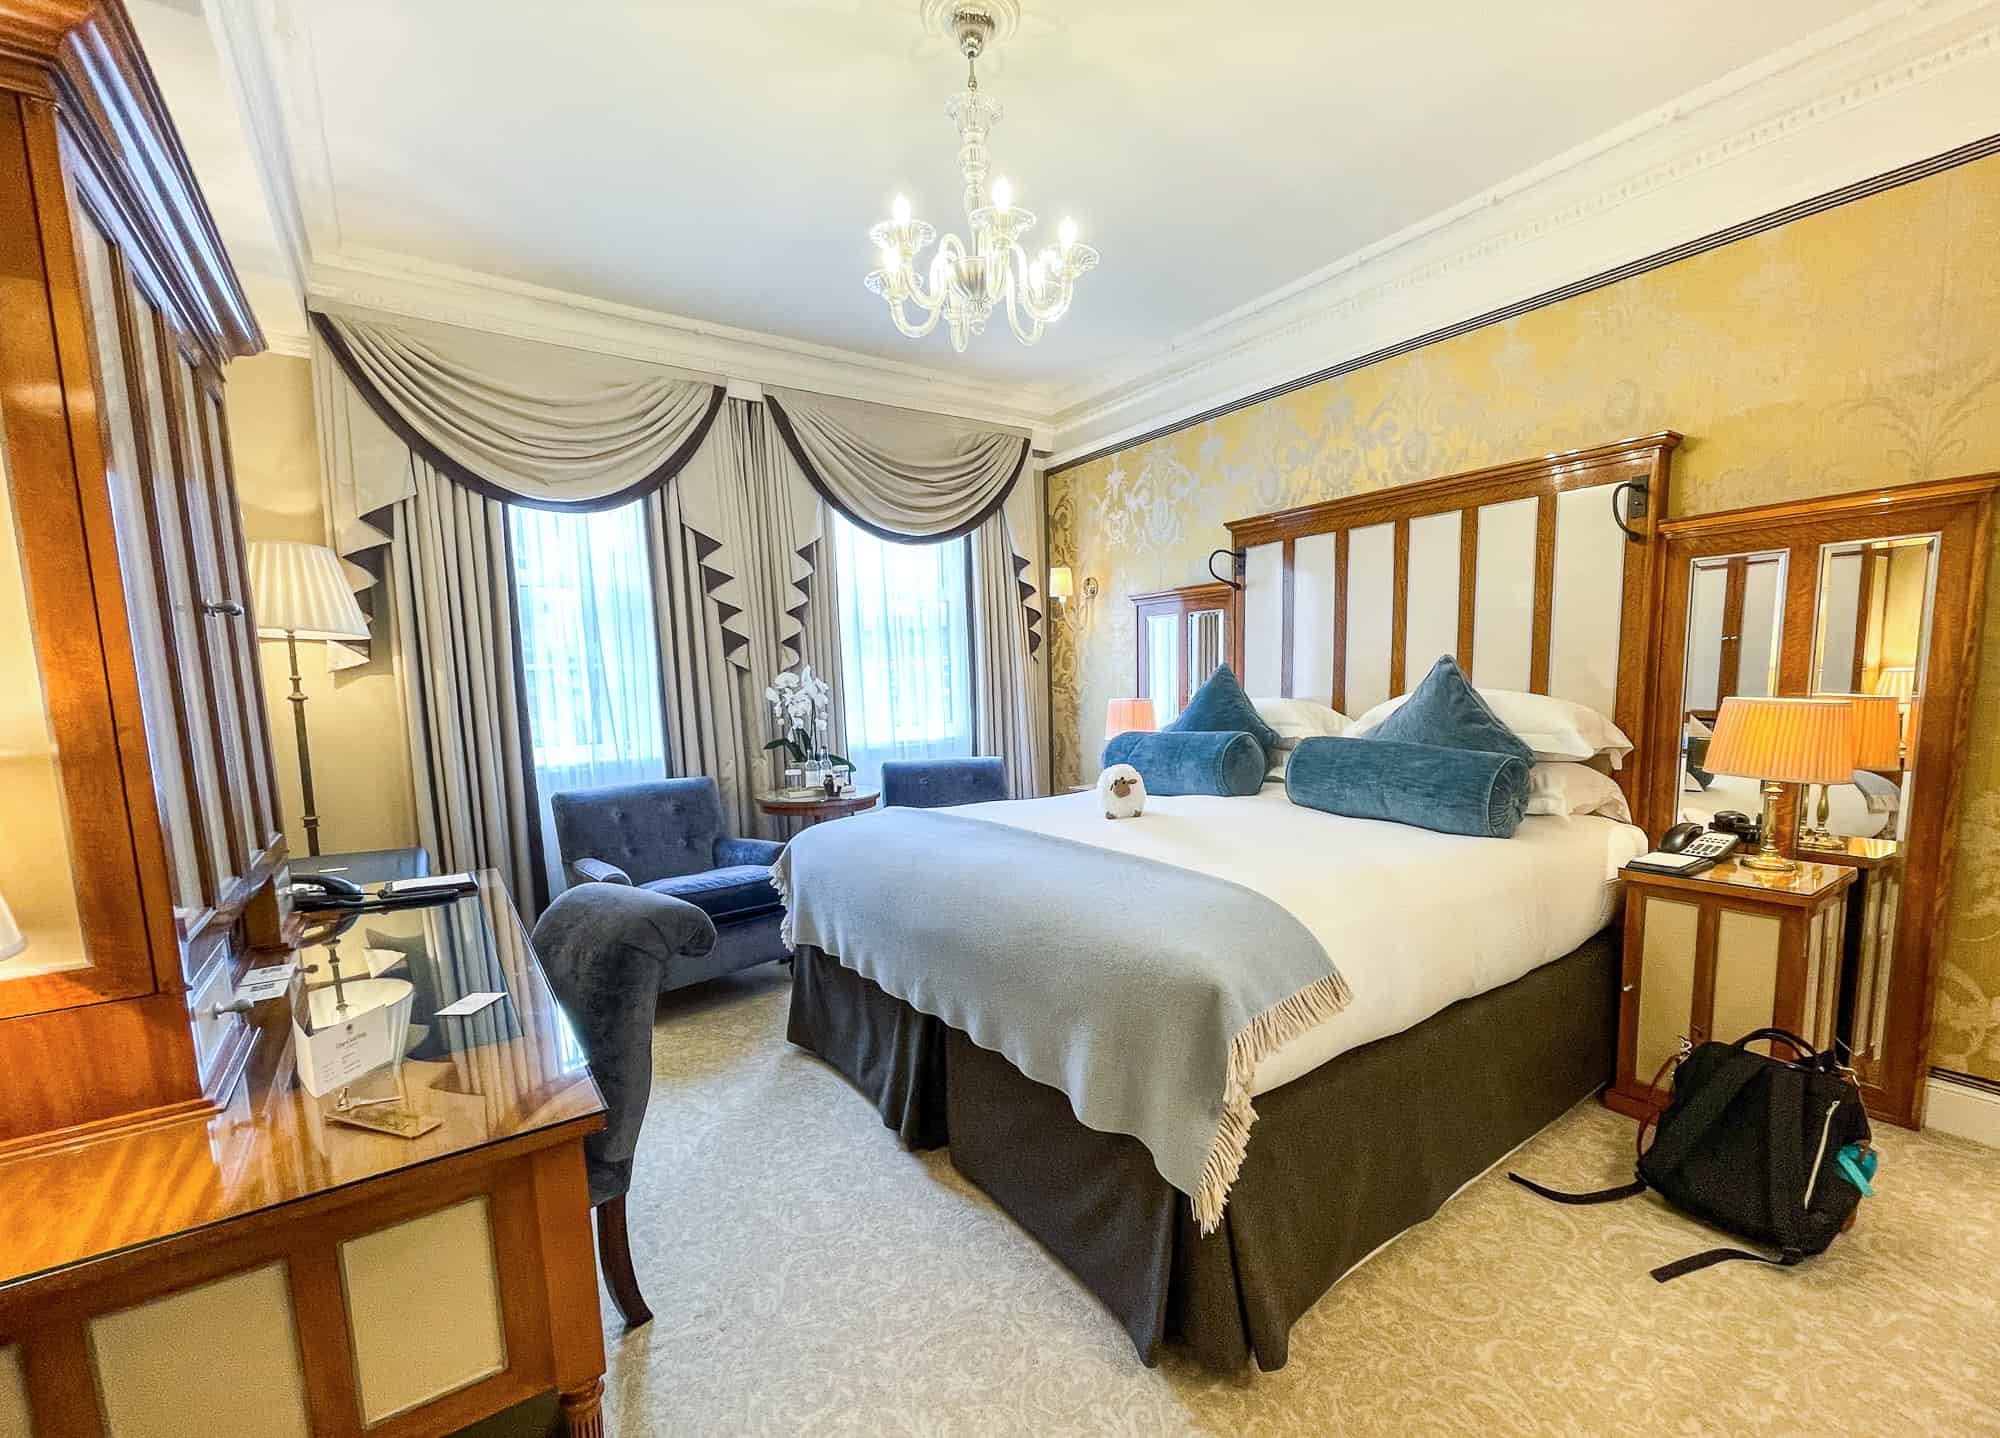 UK - England - London - Belgravia - The Goring Hotel Standard Room